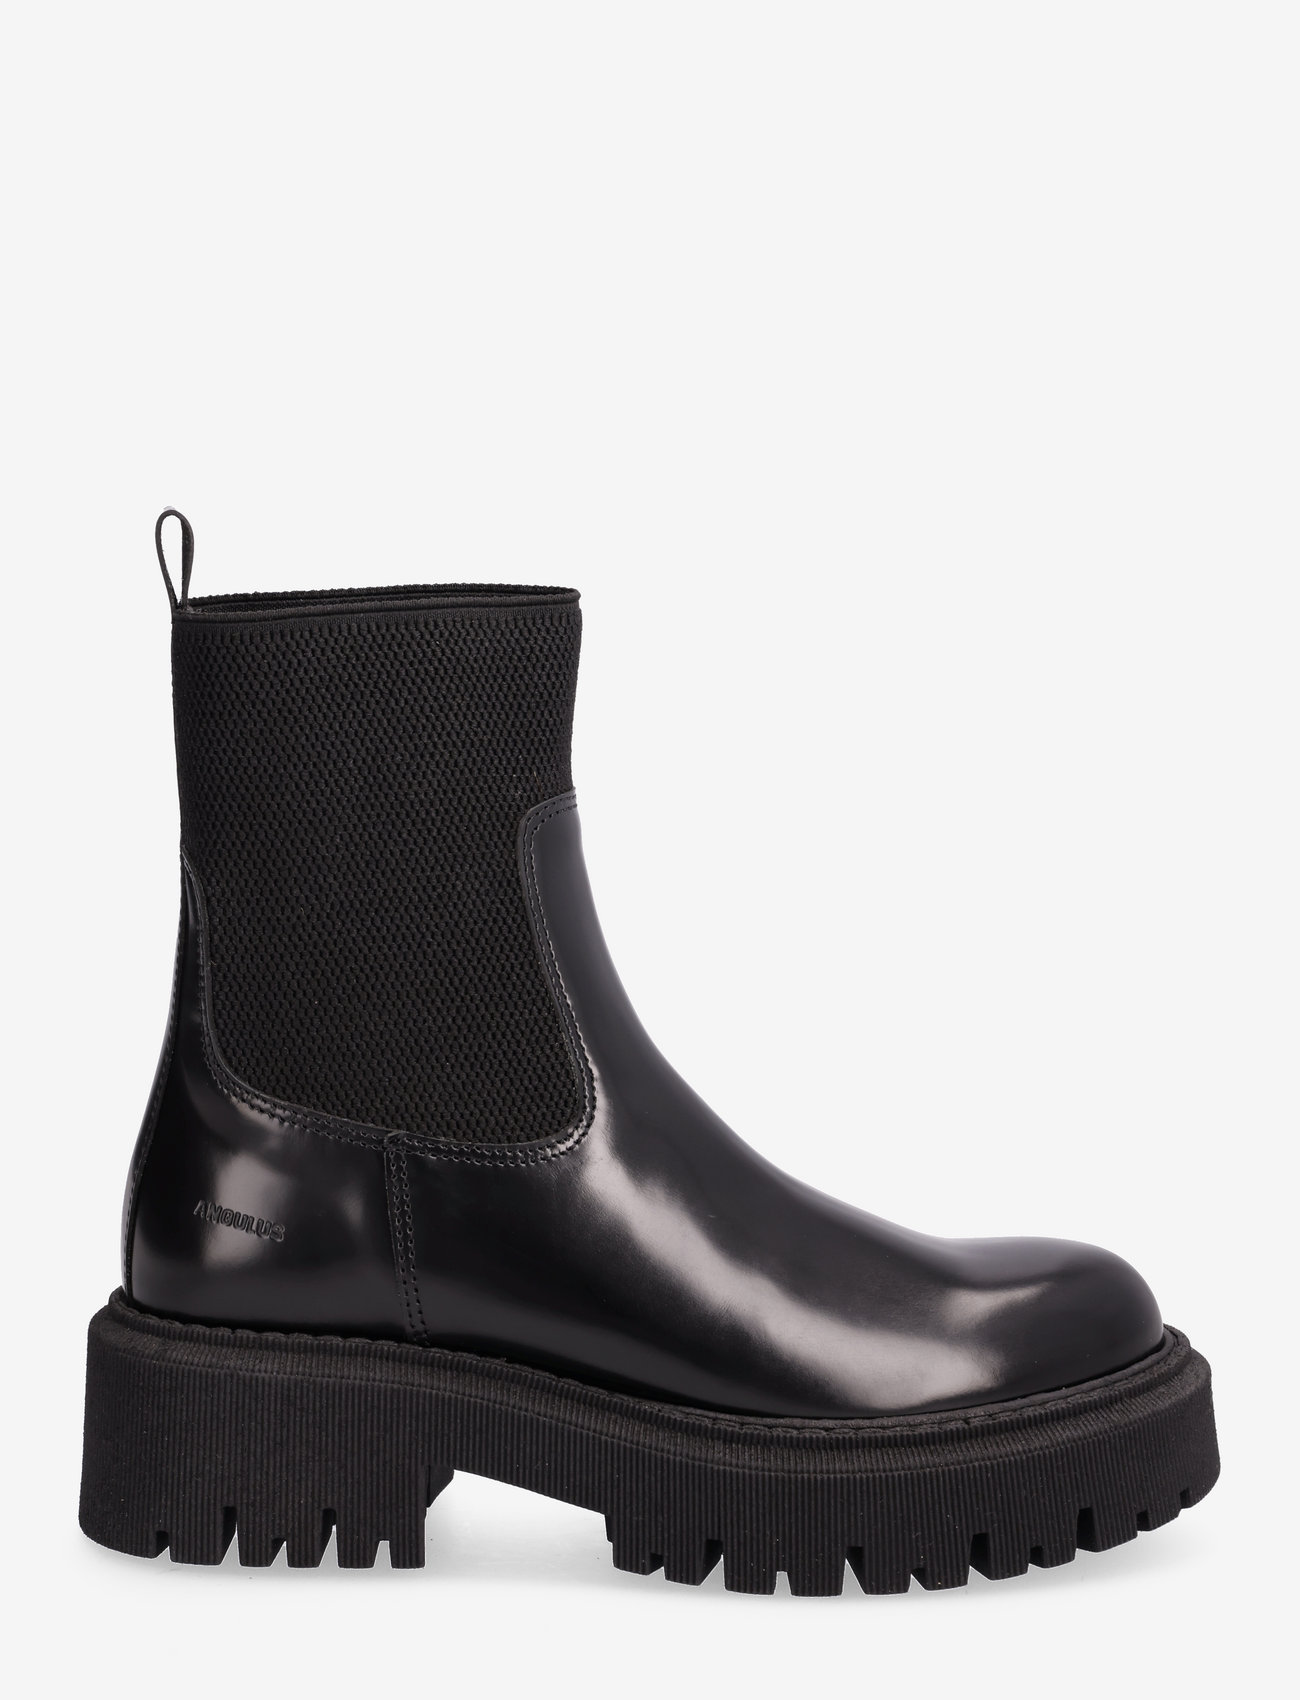 ANGULUS - Boots - flat - platte enkellaarsjes - 1425/053 black/black - 1